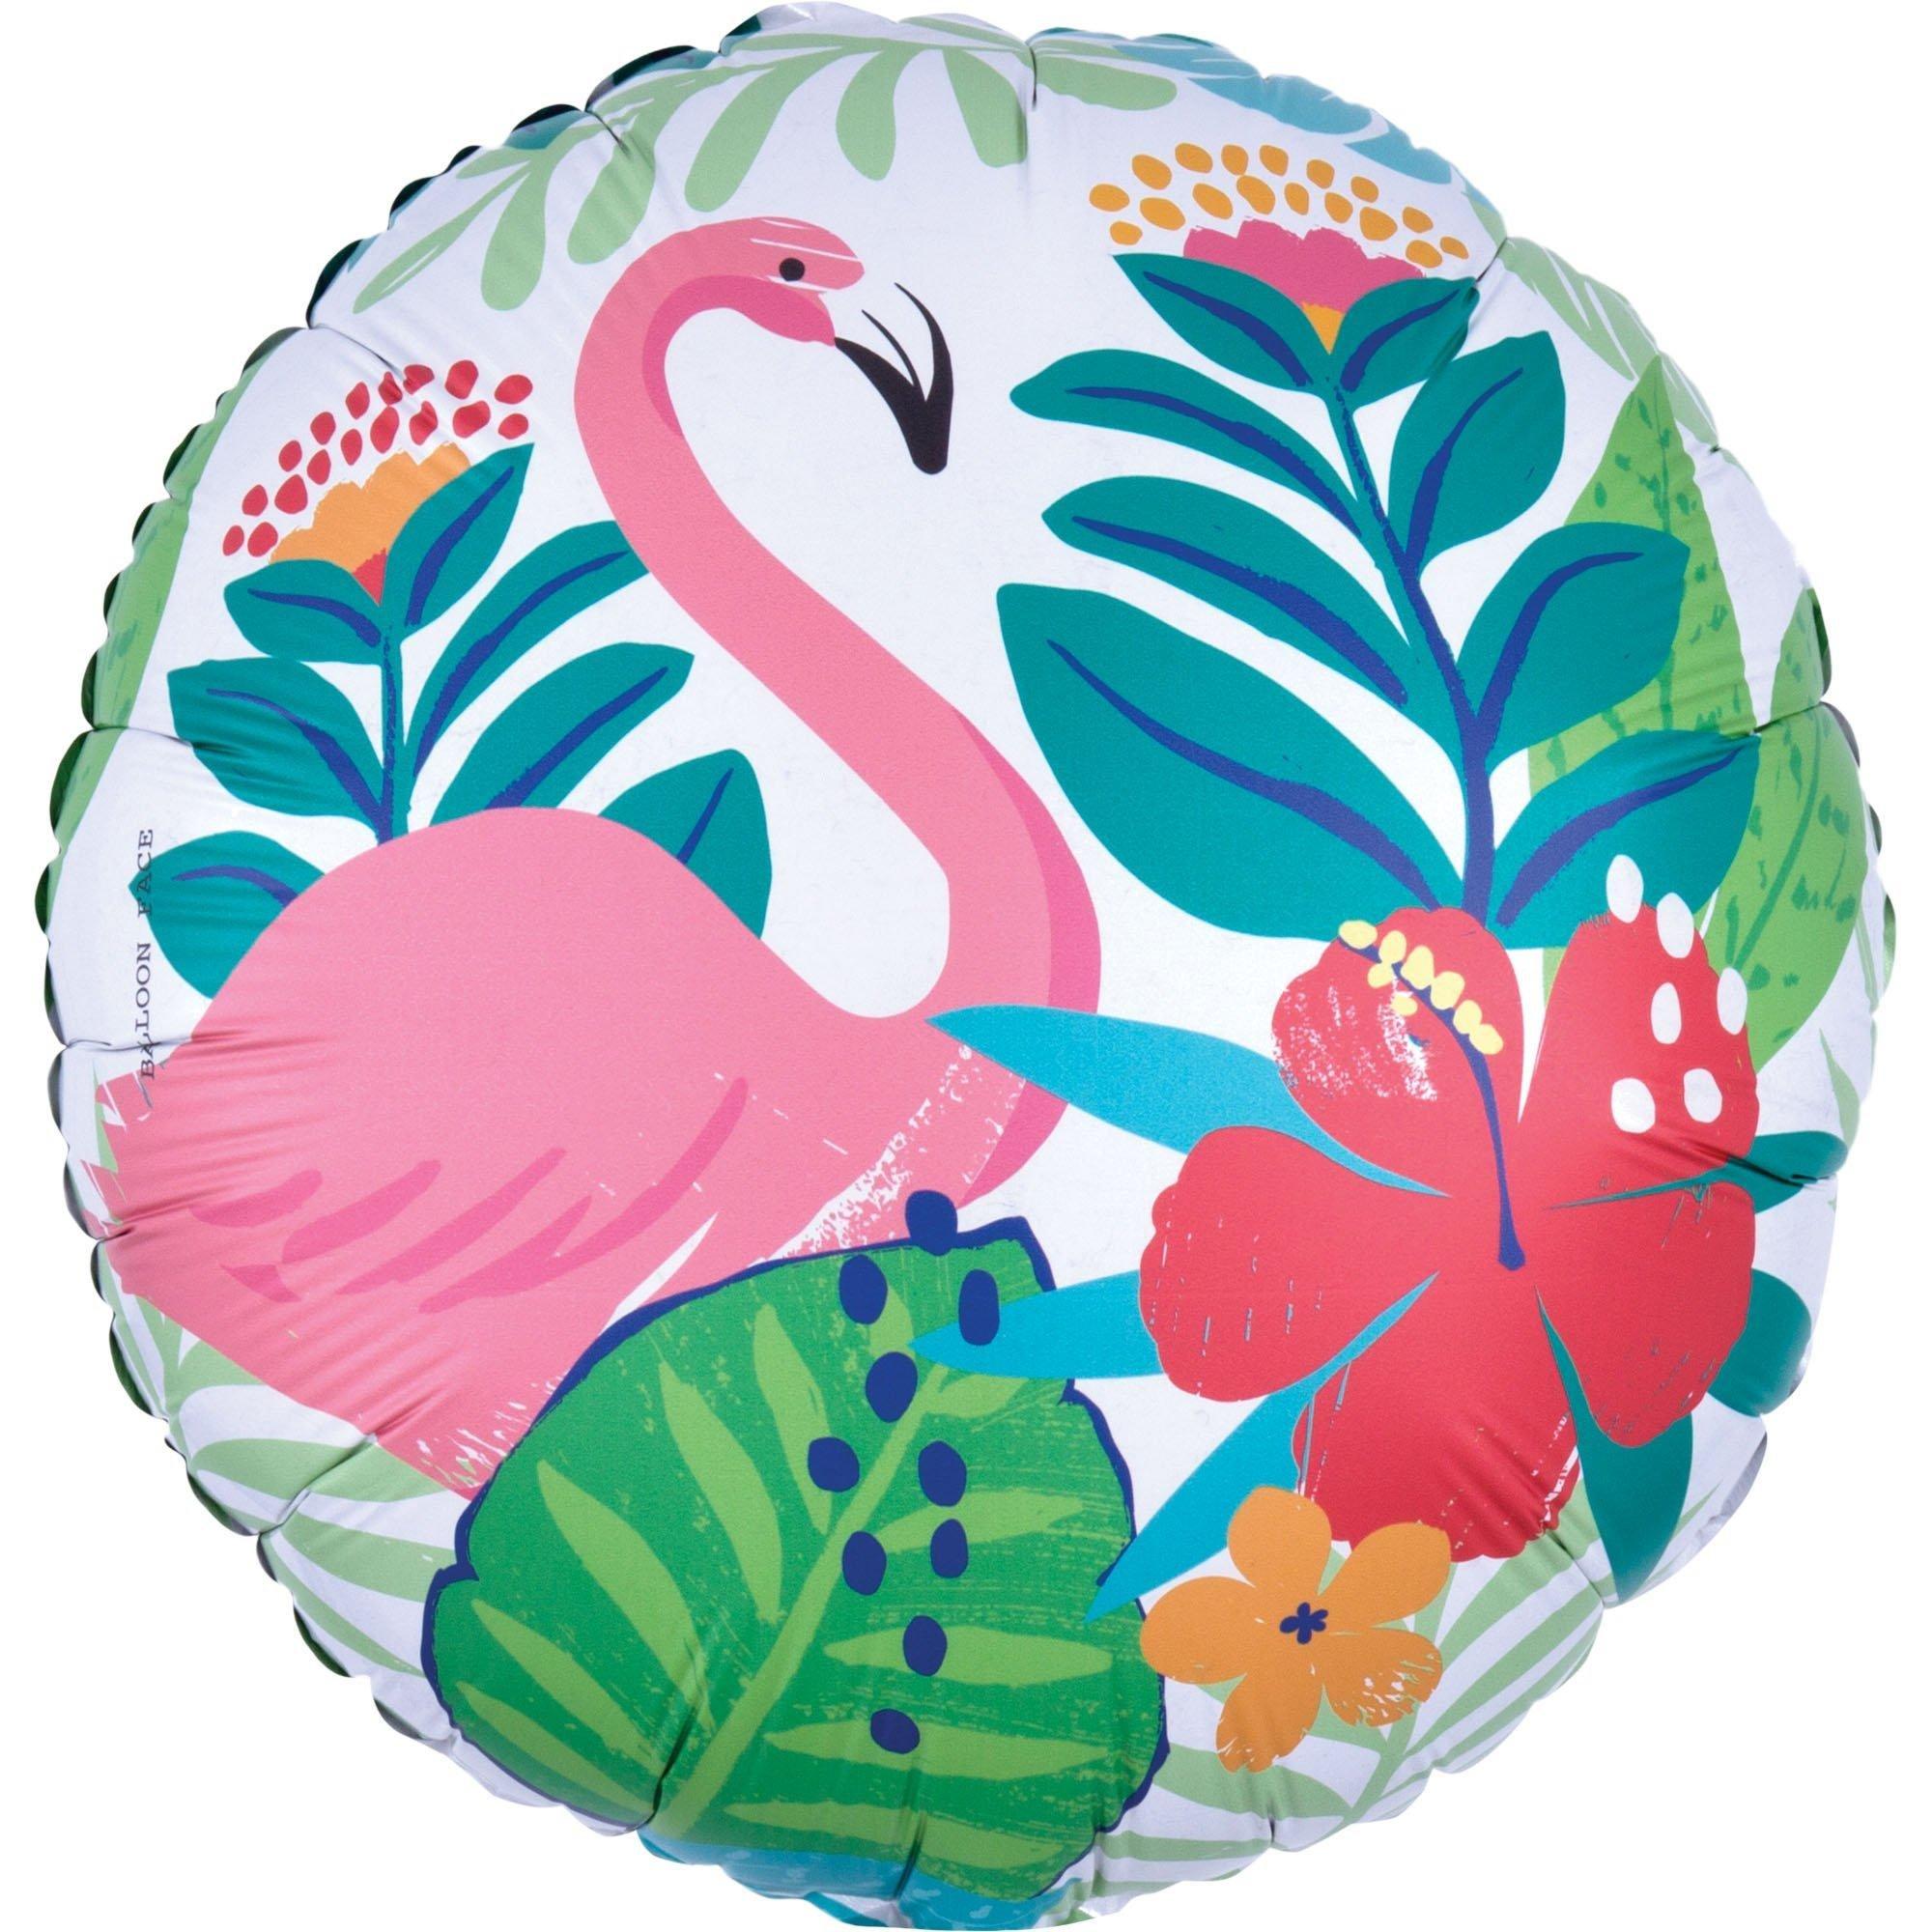 Premium Tropical Flamingo Foil Balloon Bouquet with Balloon Weight, 13pc